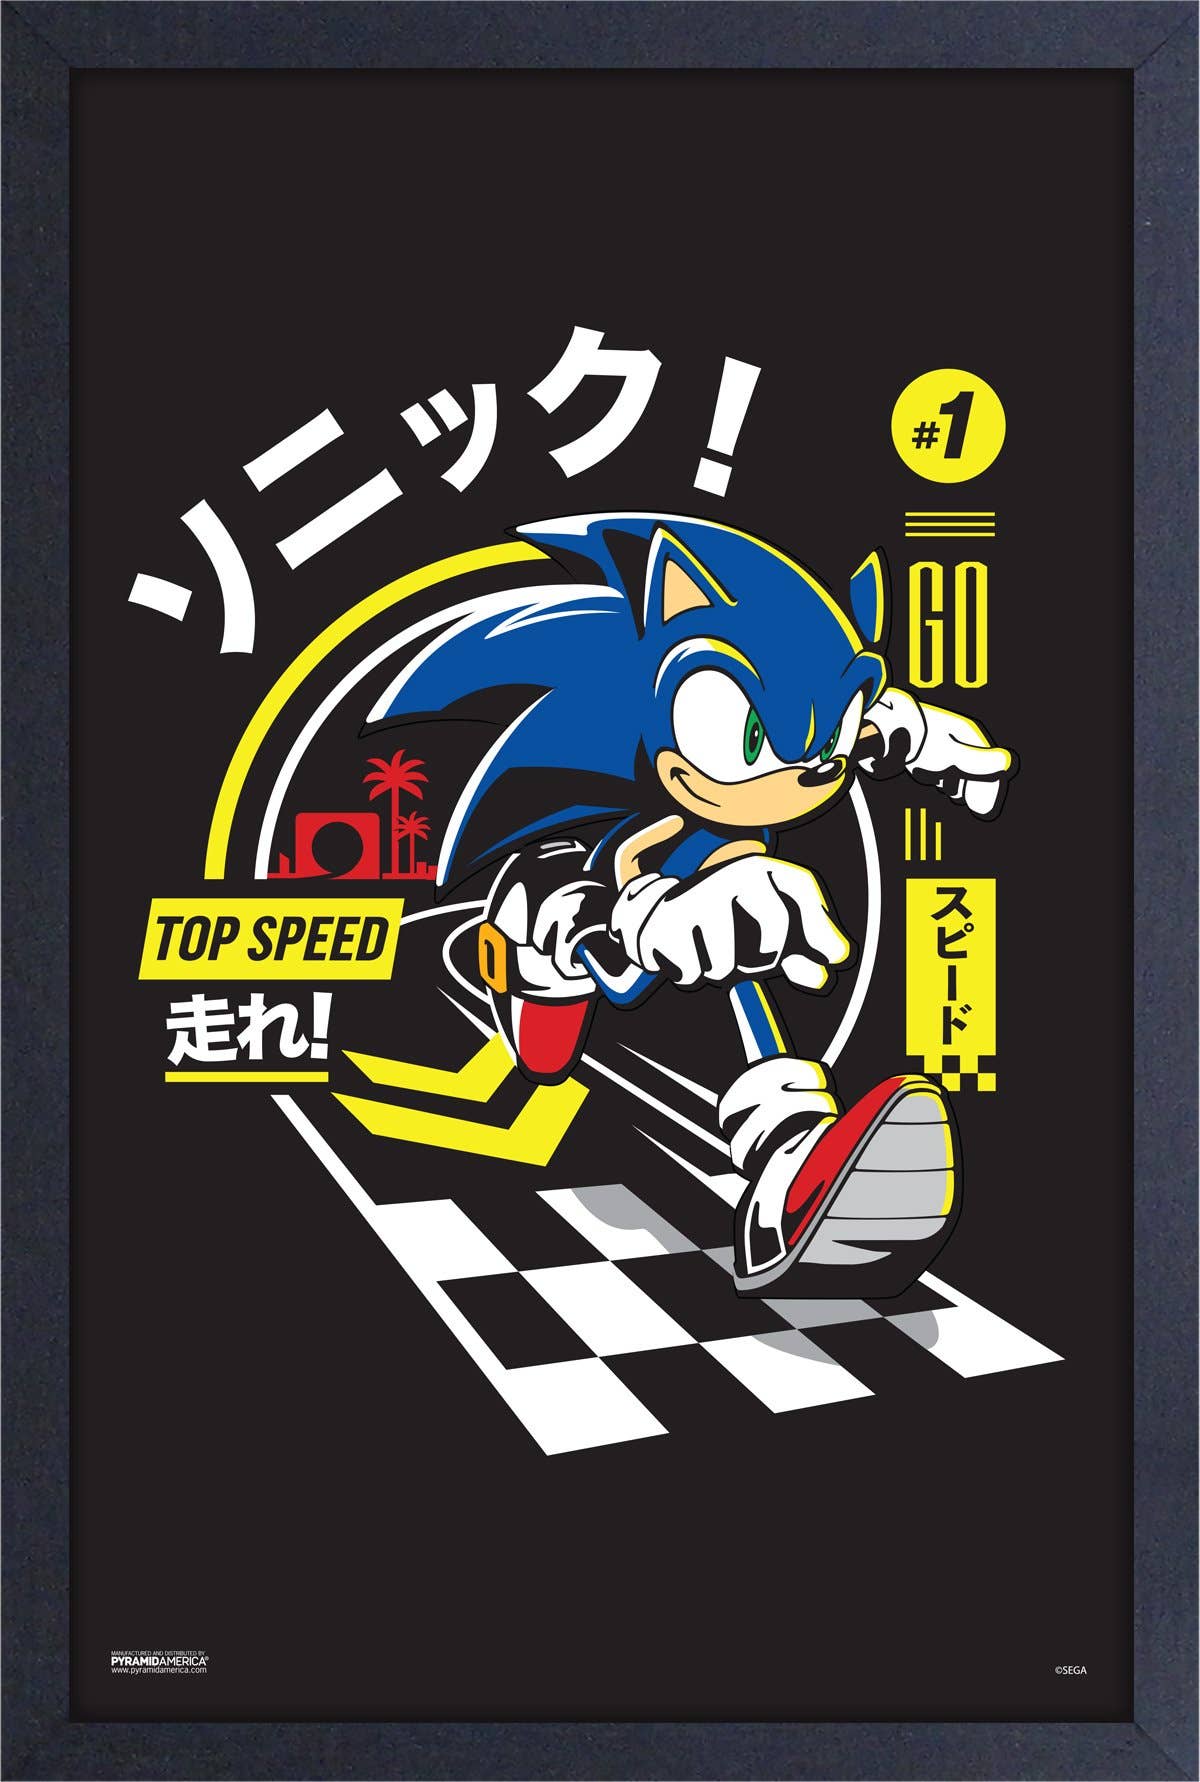 Sonic-Top Speed 11" x 17" Wall Art Display Piece 